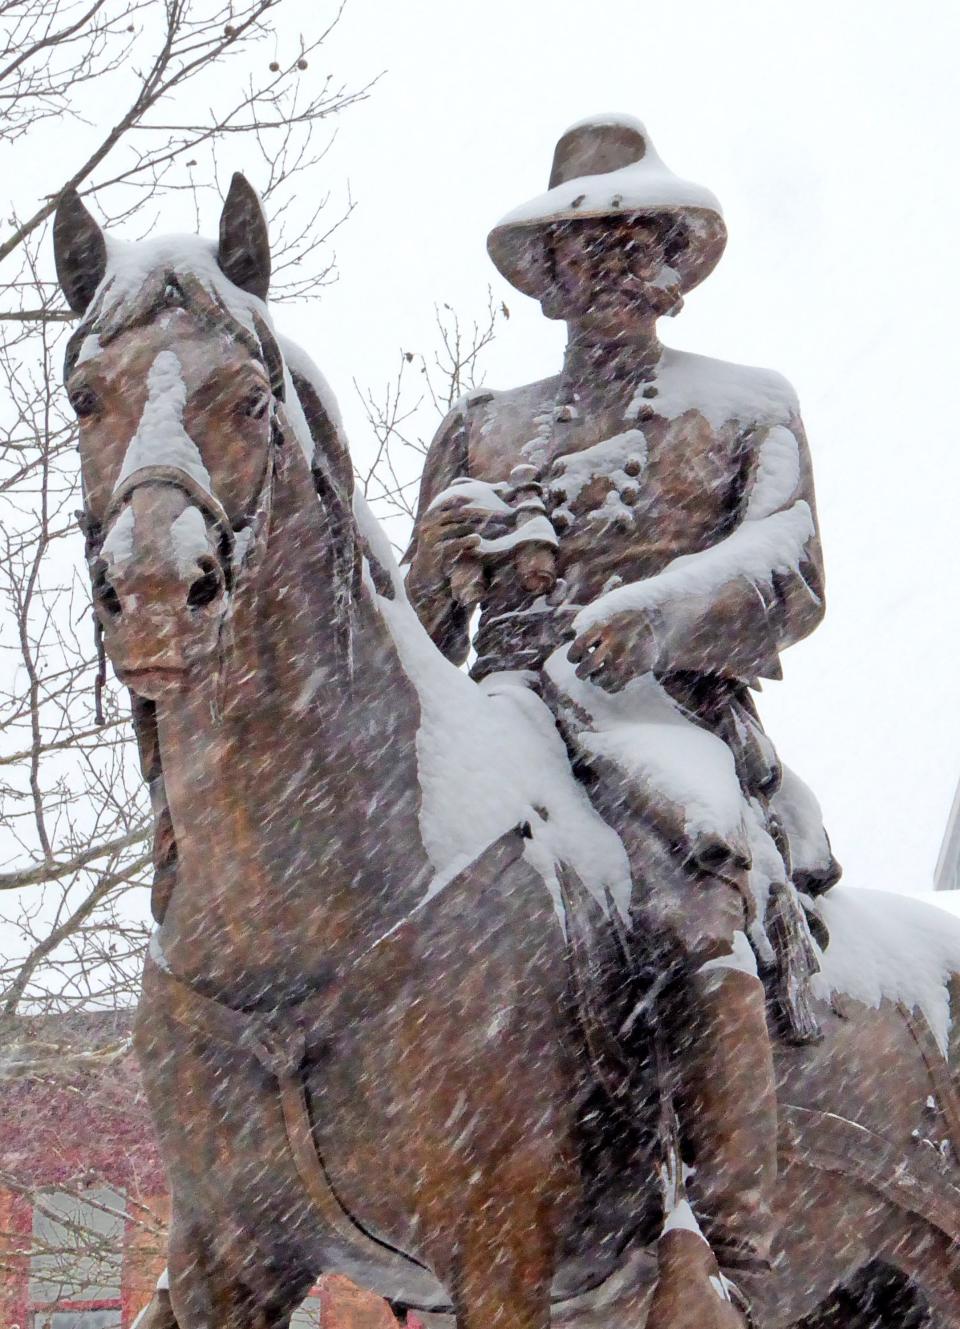 A snow-covered bronze statue of Rhode Island Governor, Senator, and Civil War General Ambrose Burnside on horseback.